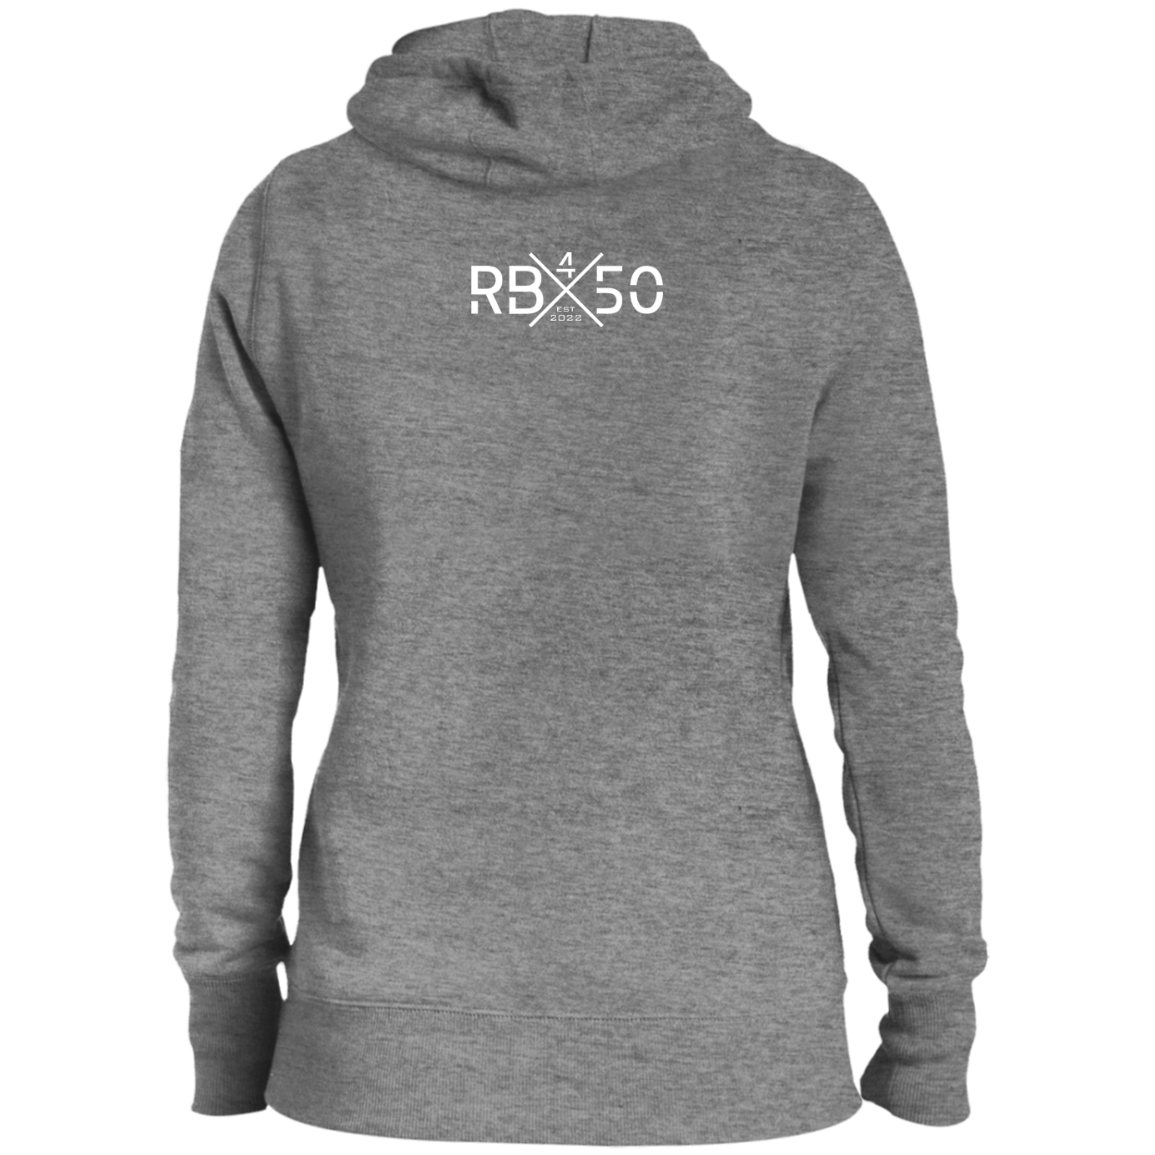 RB450 Ladies' Lifestyle Hooded Sweatshirt